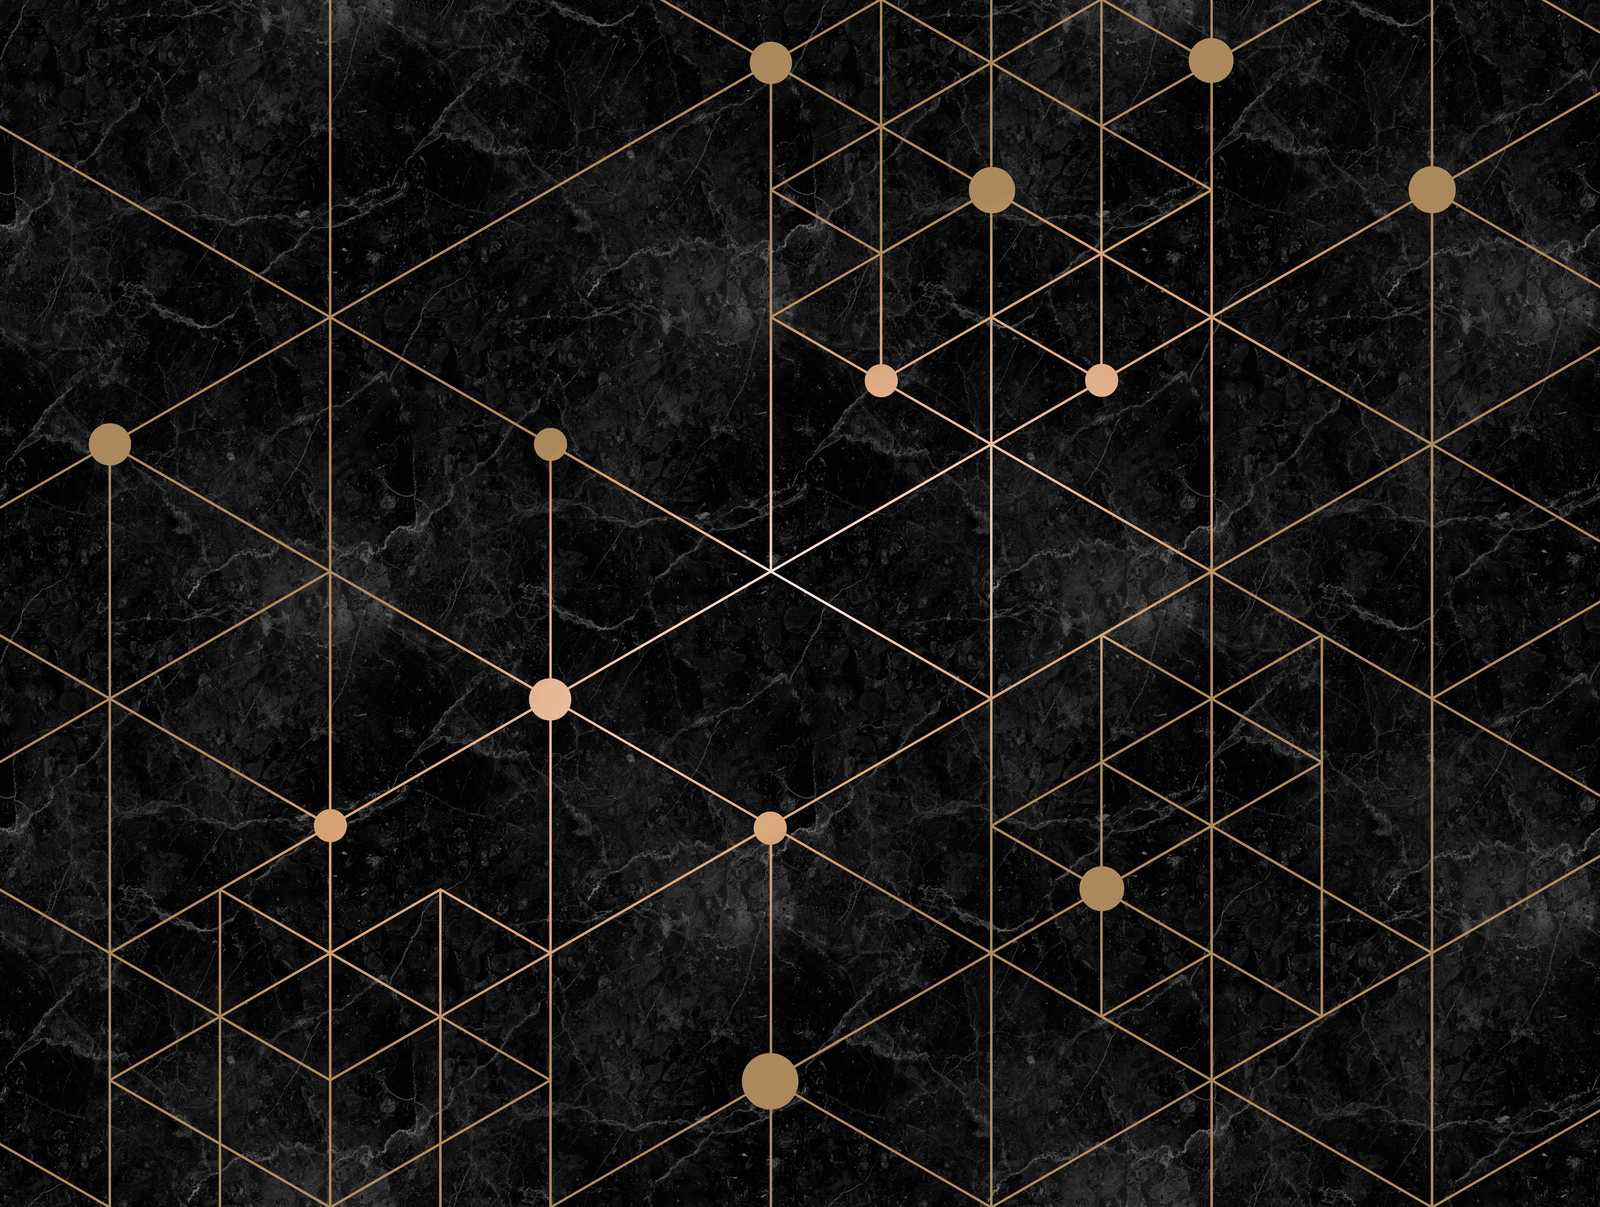             Wallpaper novelty - black marble motif wallpaper with gold design
        